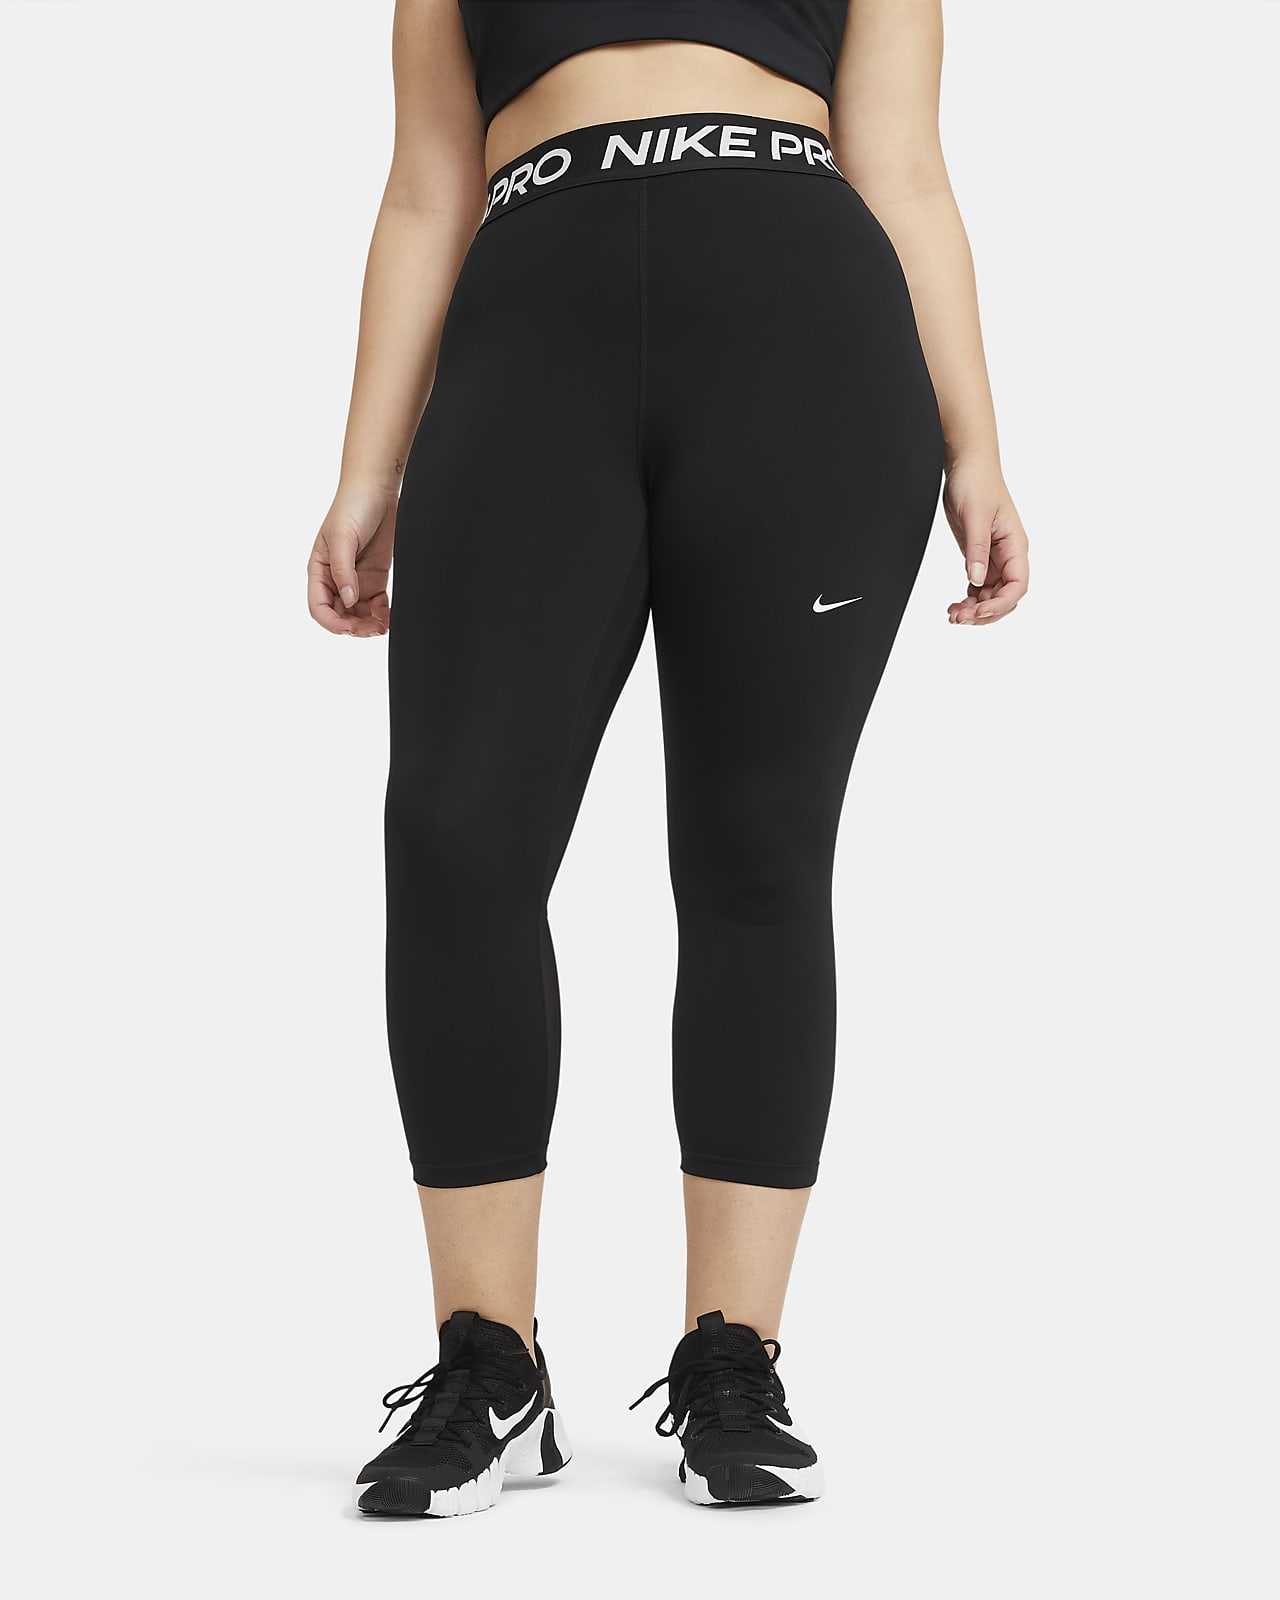 Legginsy Damskie Nike Pro Fitness Spodnie Sport S - Ceny i opinie